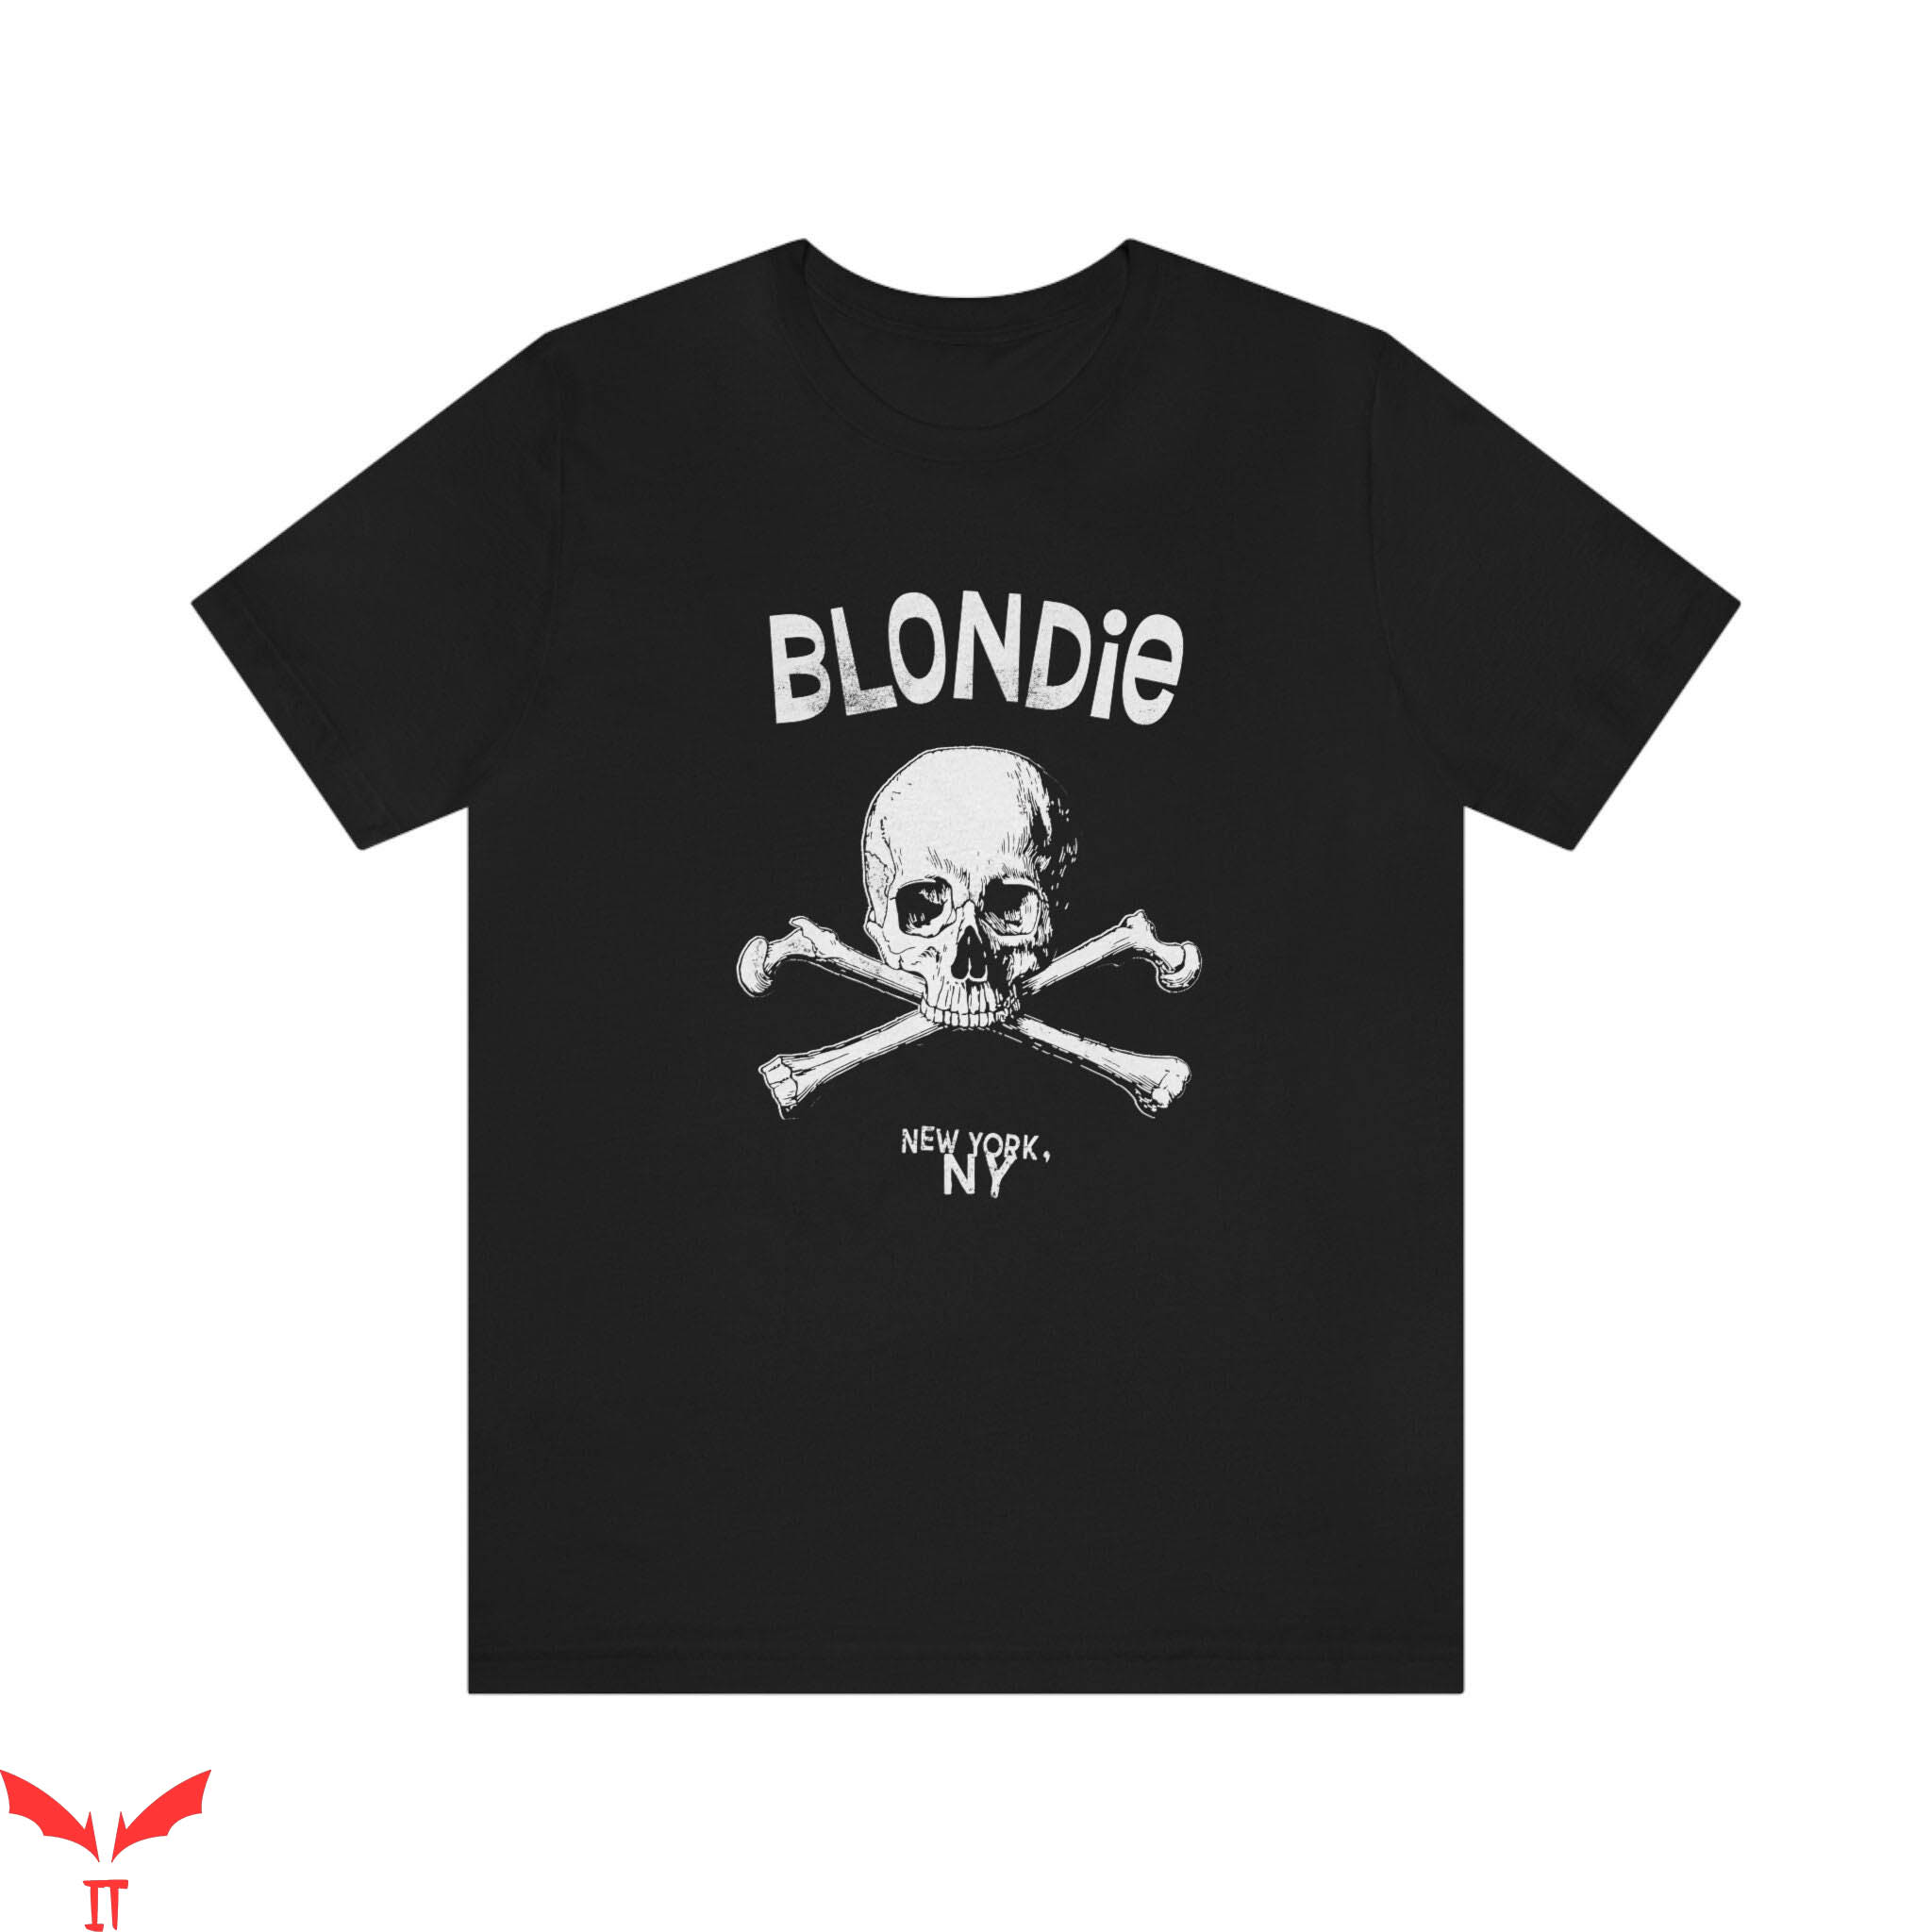 Blondie Vintage T-Shirt New York Bands Punk Rock Shirt